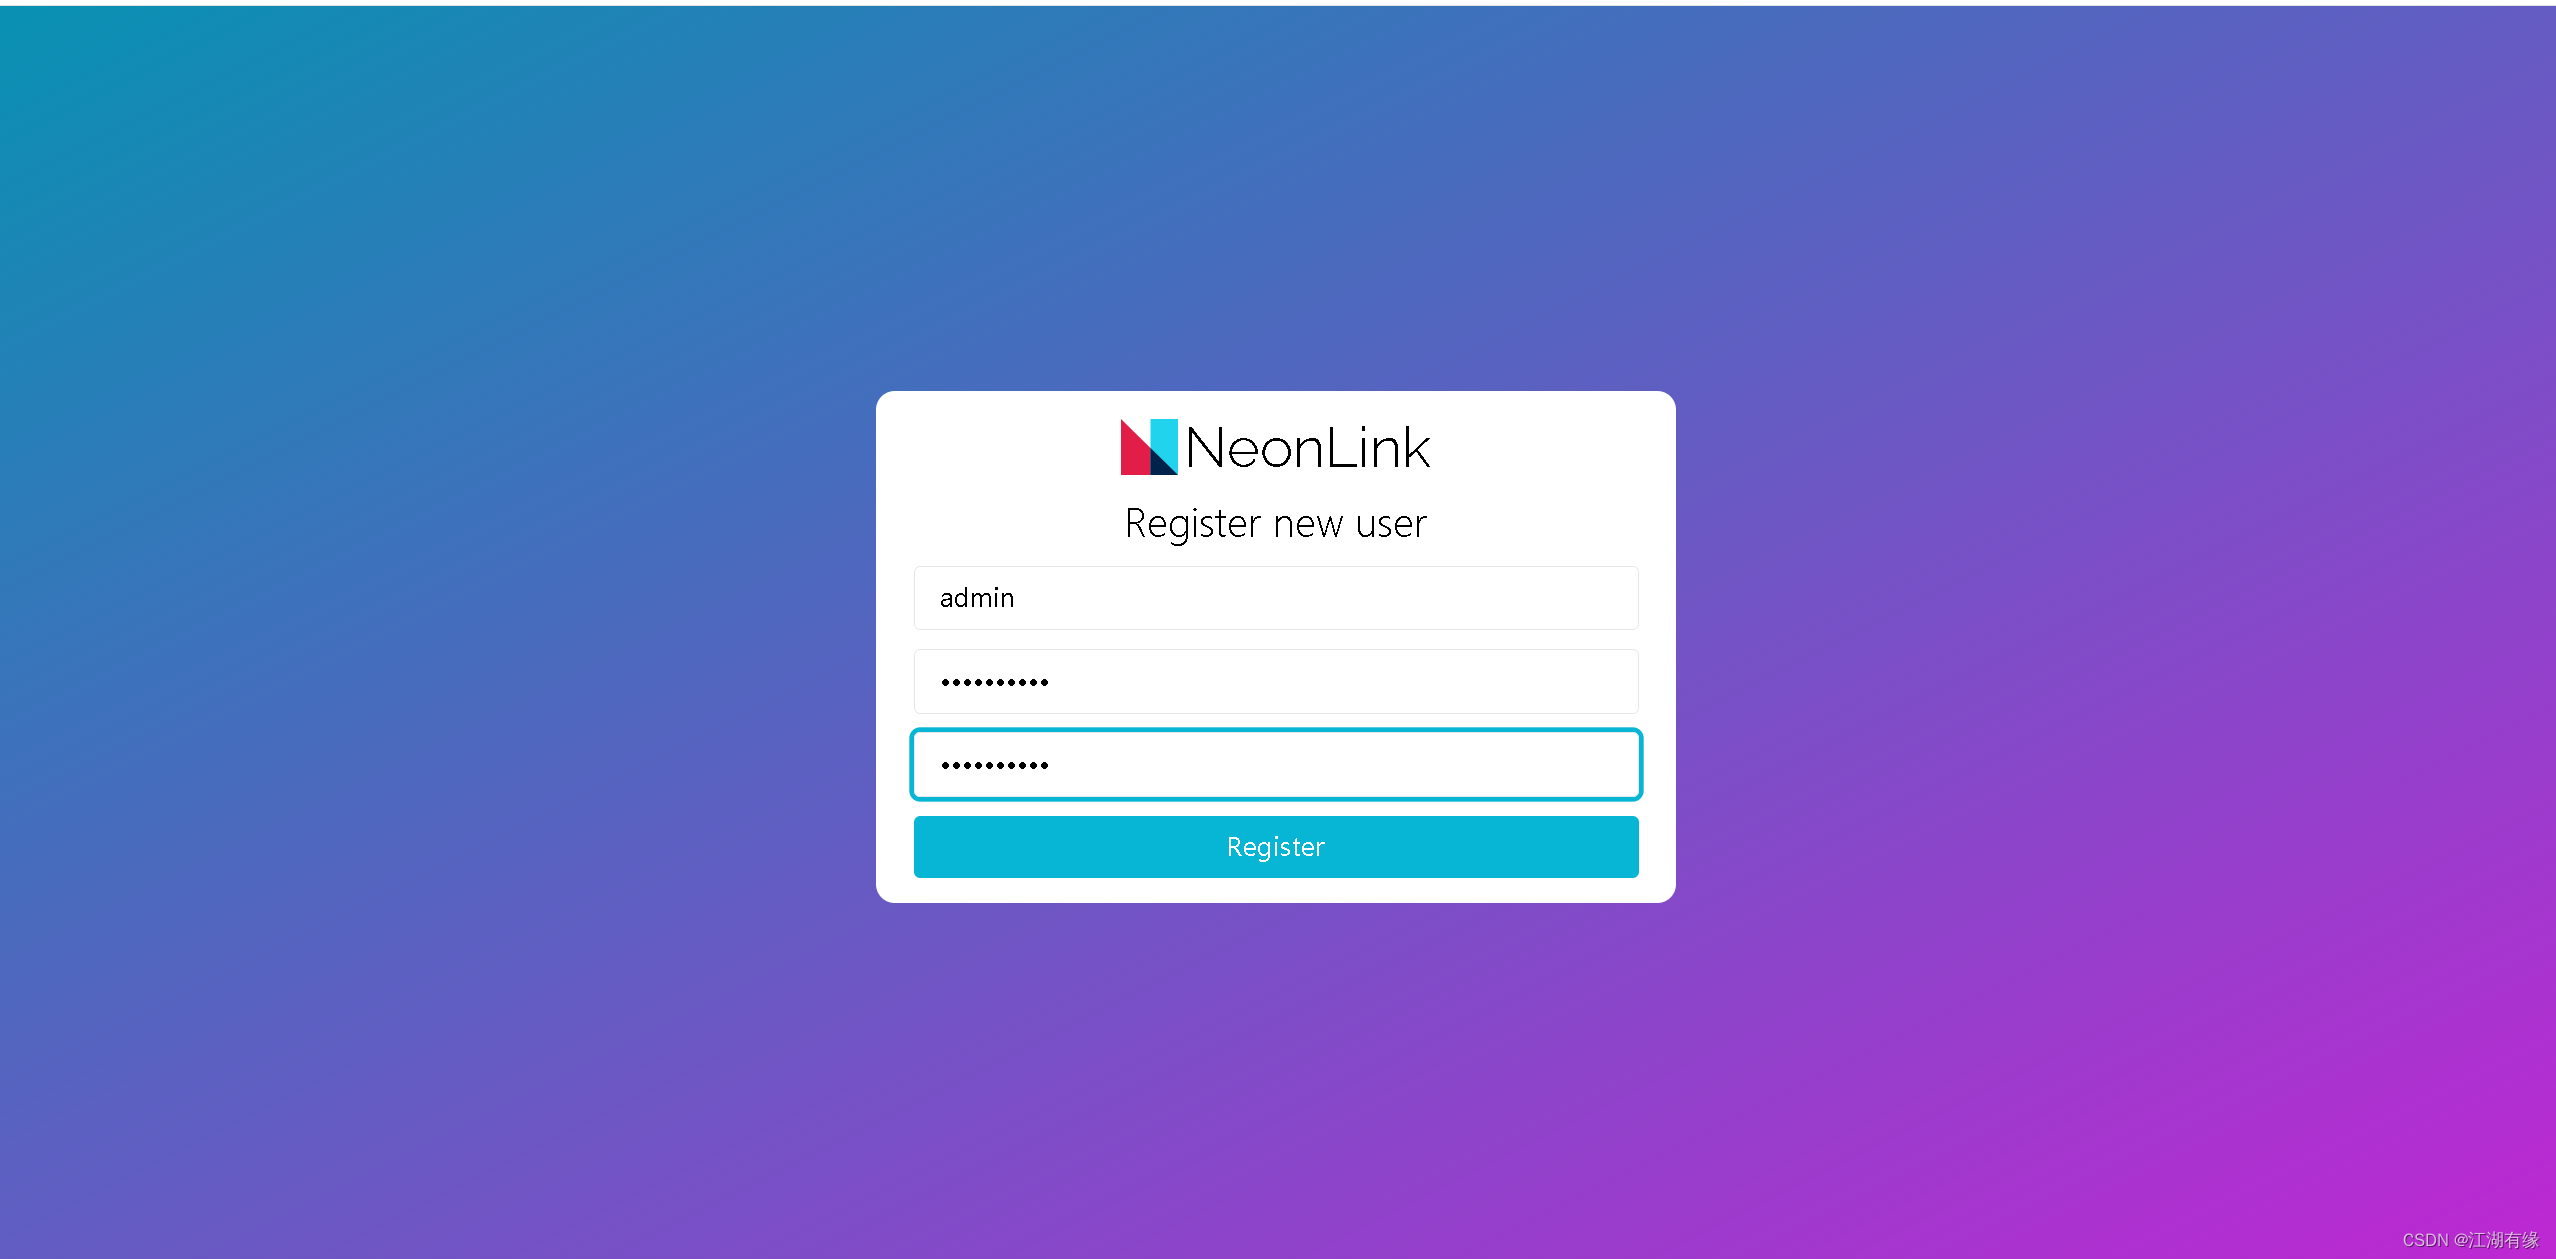 【Docker项目实战】Docker环境下部署NeonLink书签平台